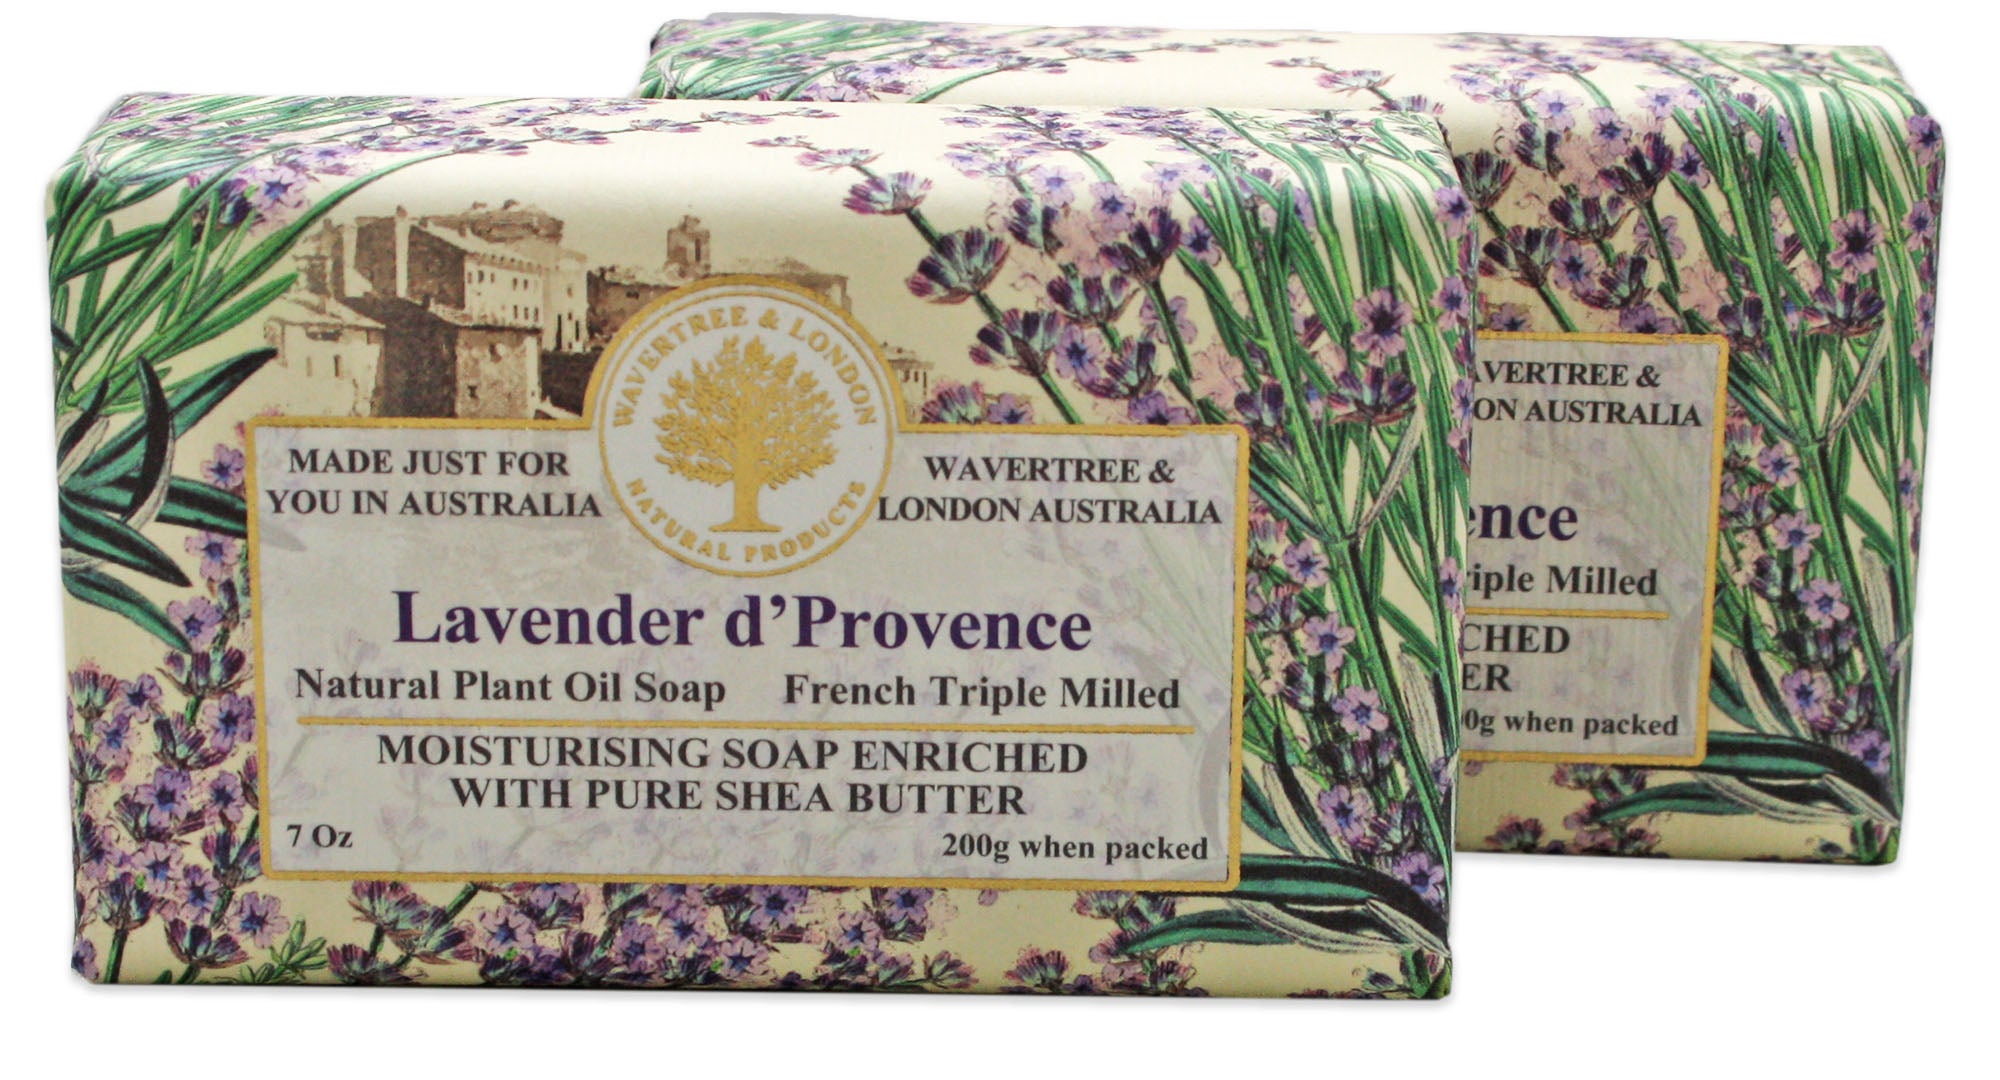 Wavertree & London Lavender d Provence Soap: Premium Quality, Moisturizing Natural Soap Bar